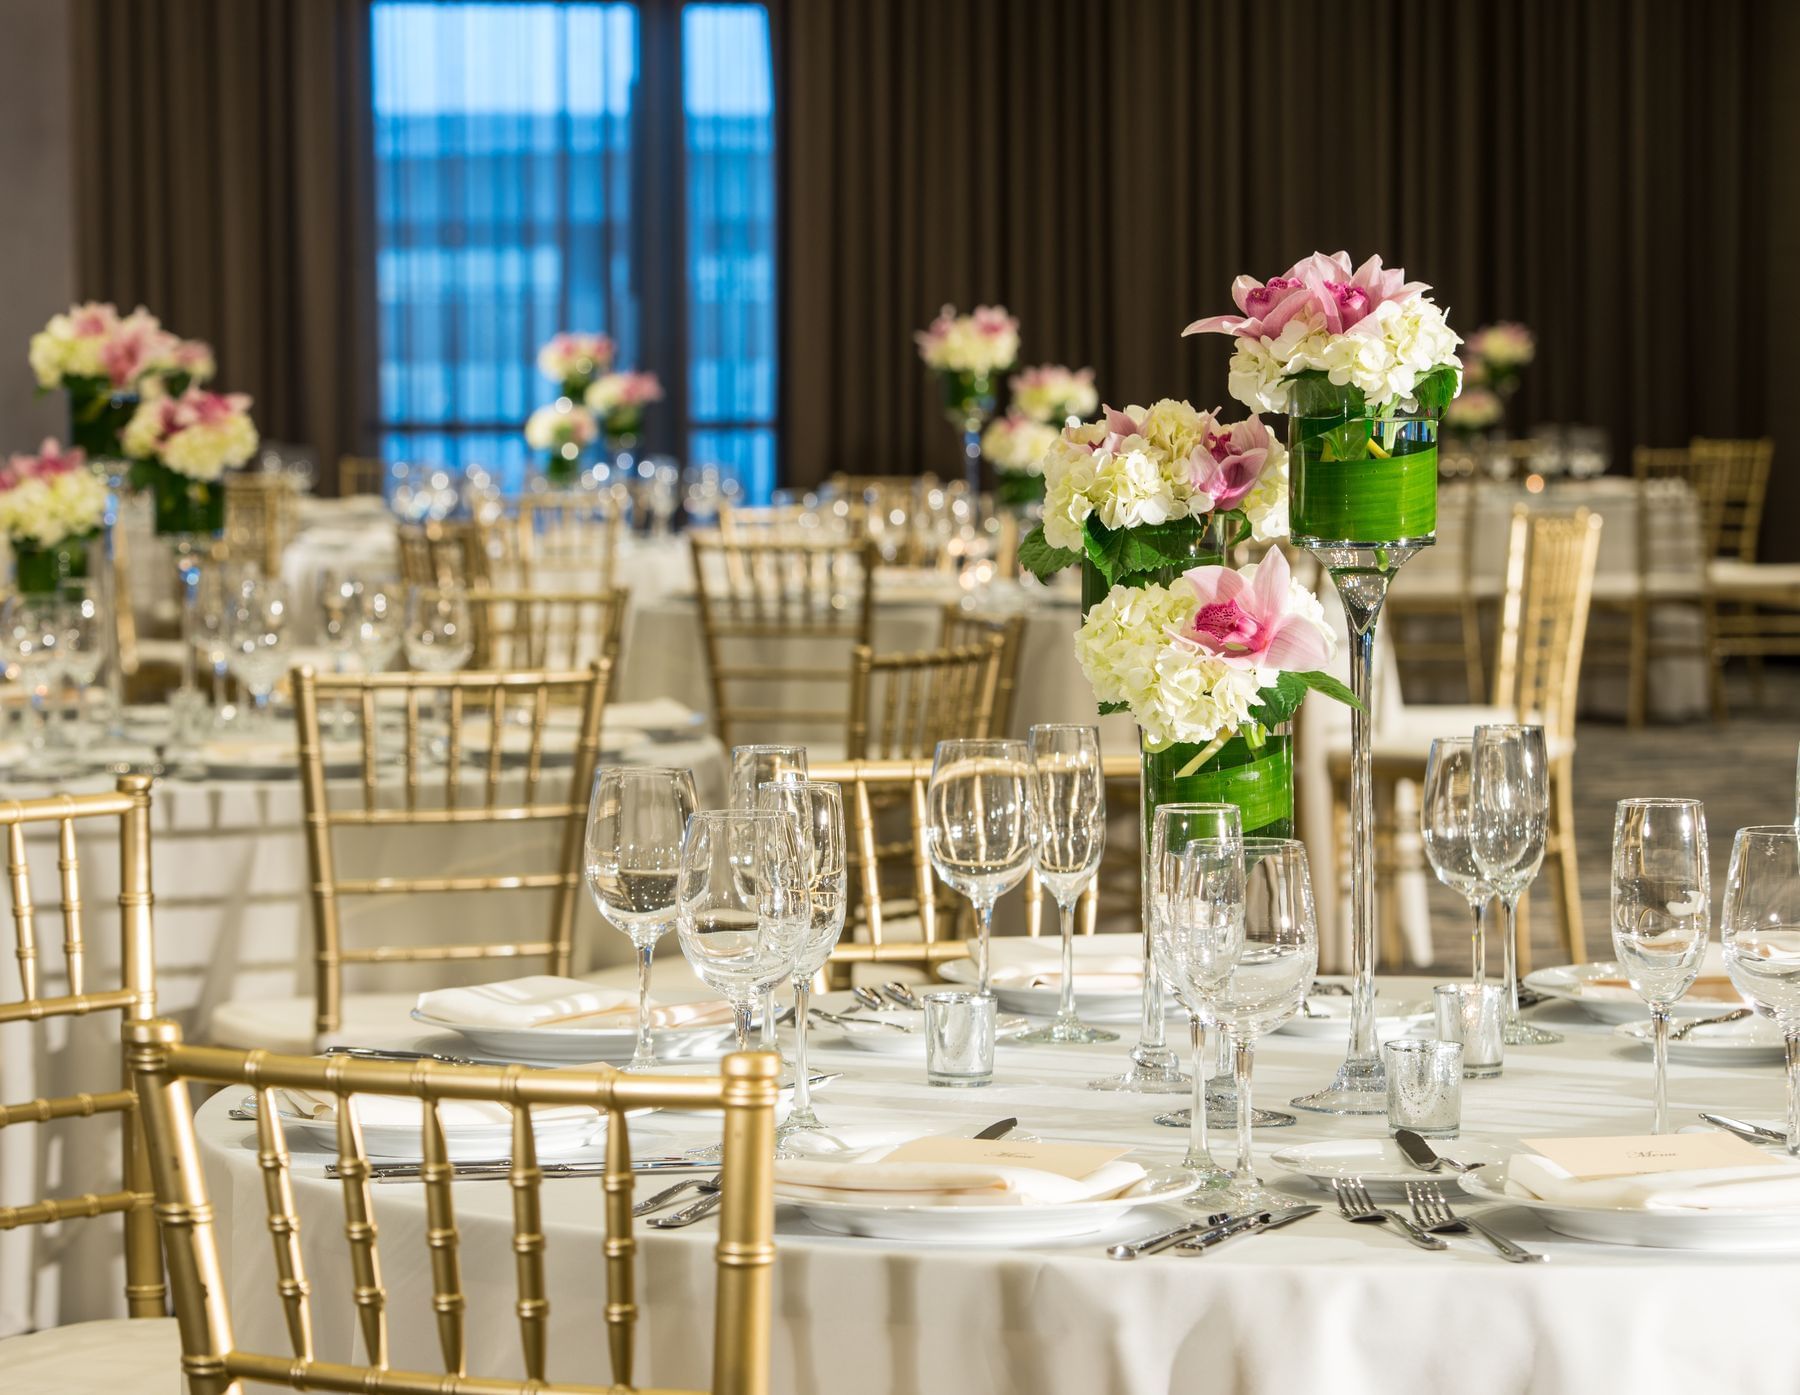 Banquet rounds set with floral centerpieces